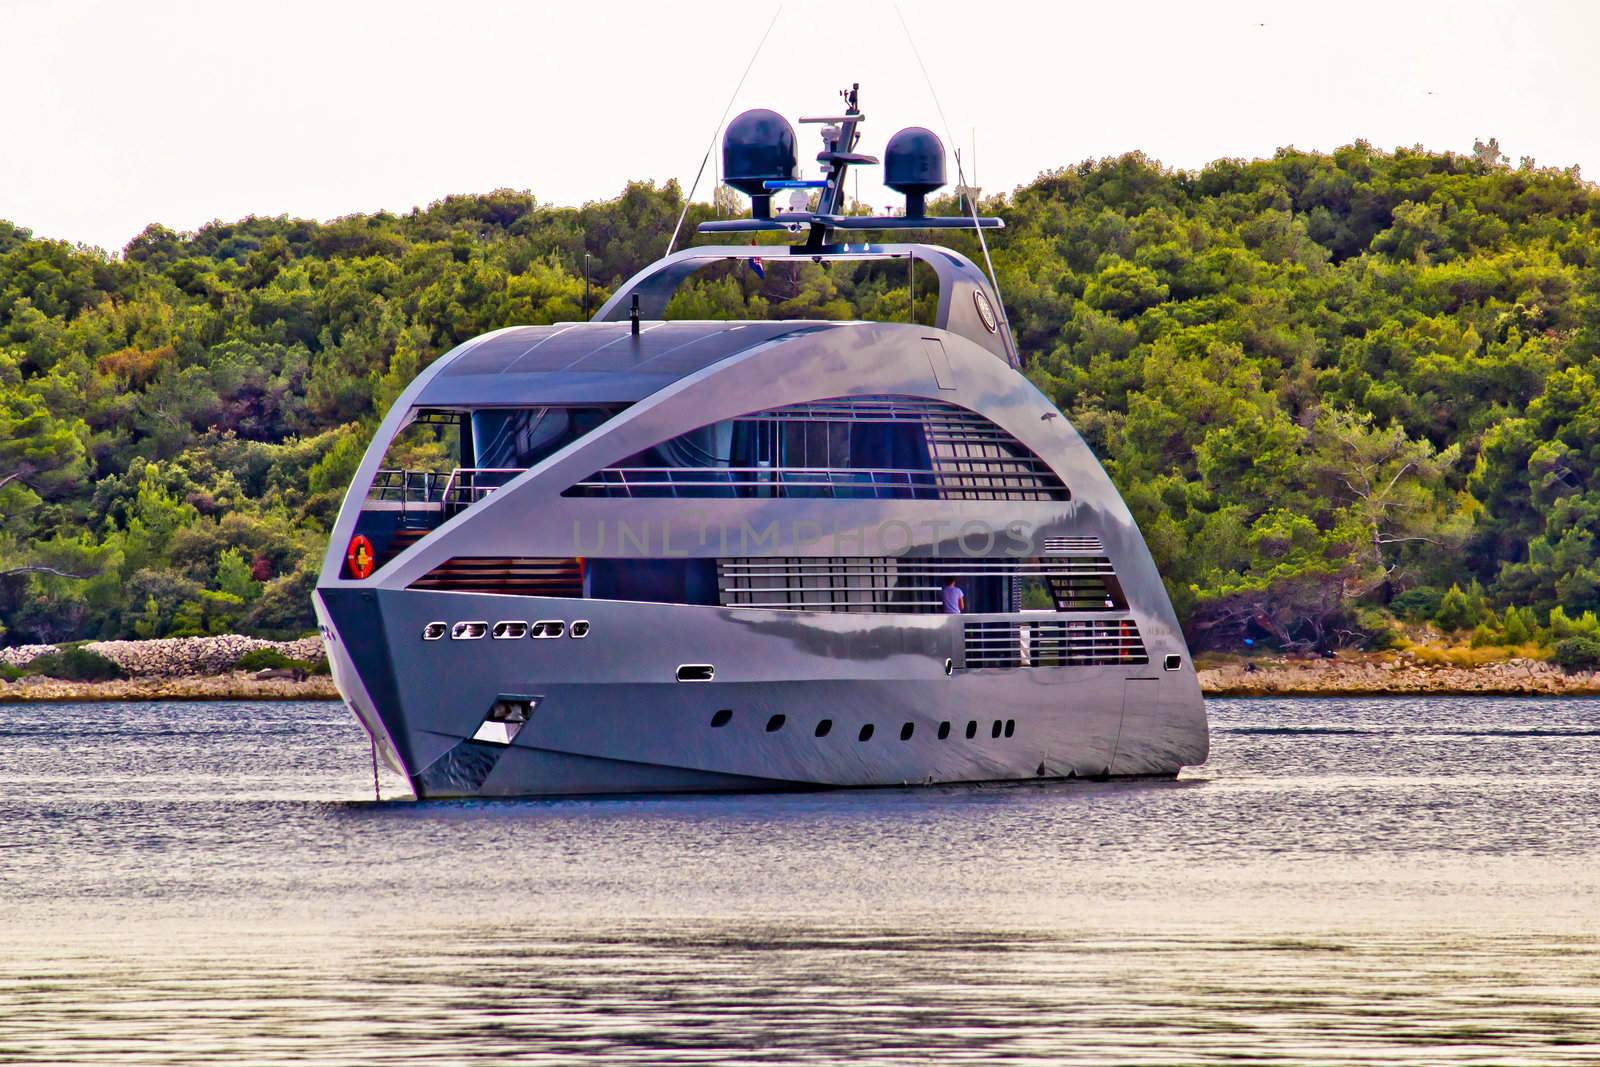 Modern design hi tech luxury yacht by xbrchx